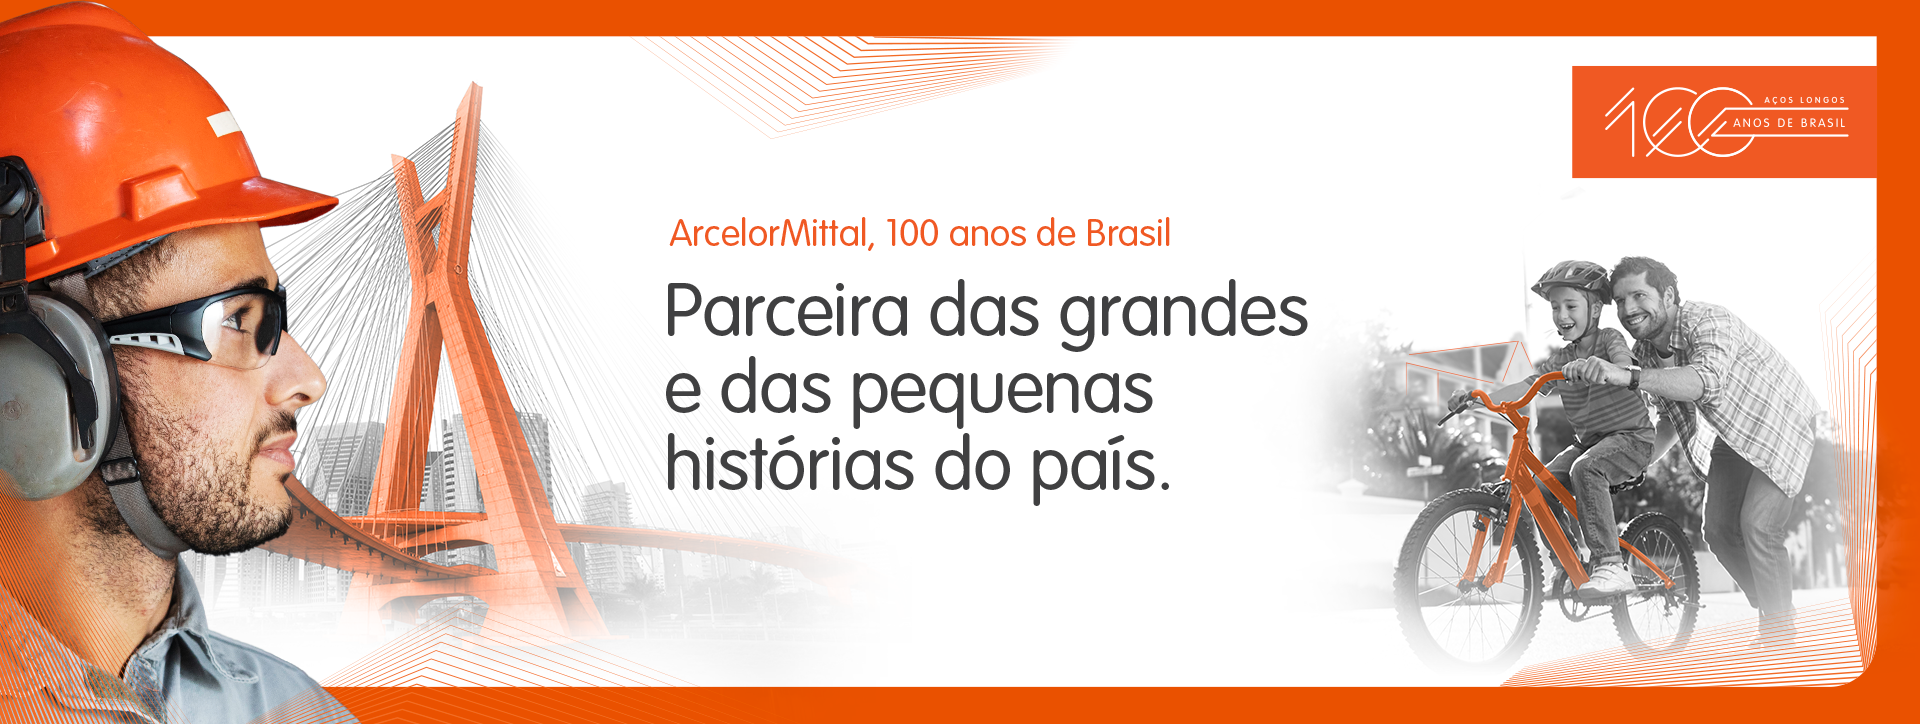 ArcelorMittal Aços Longos, 100 anos de Brasil